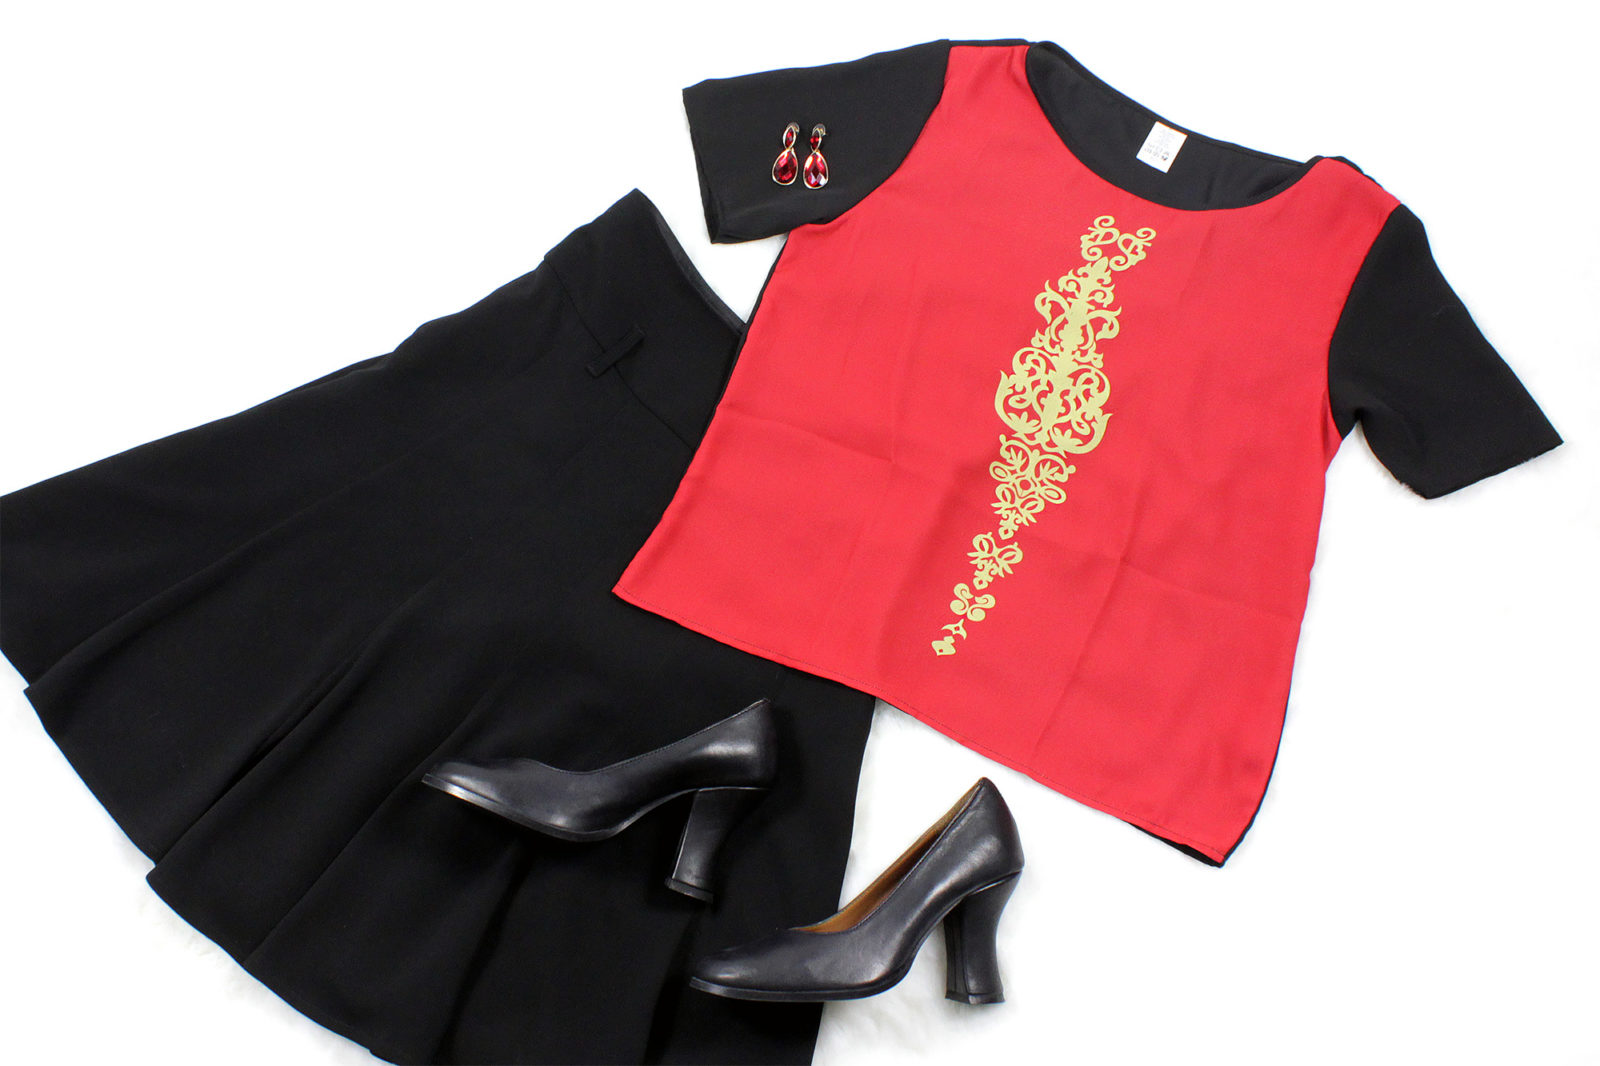 Review – Fashions For Fans Queen Amidala Shirt